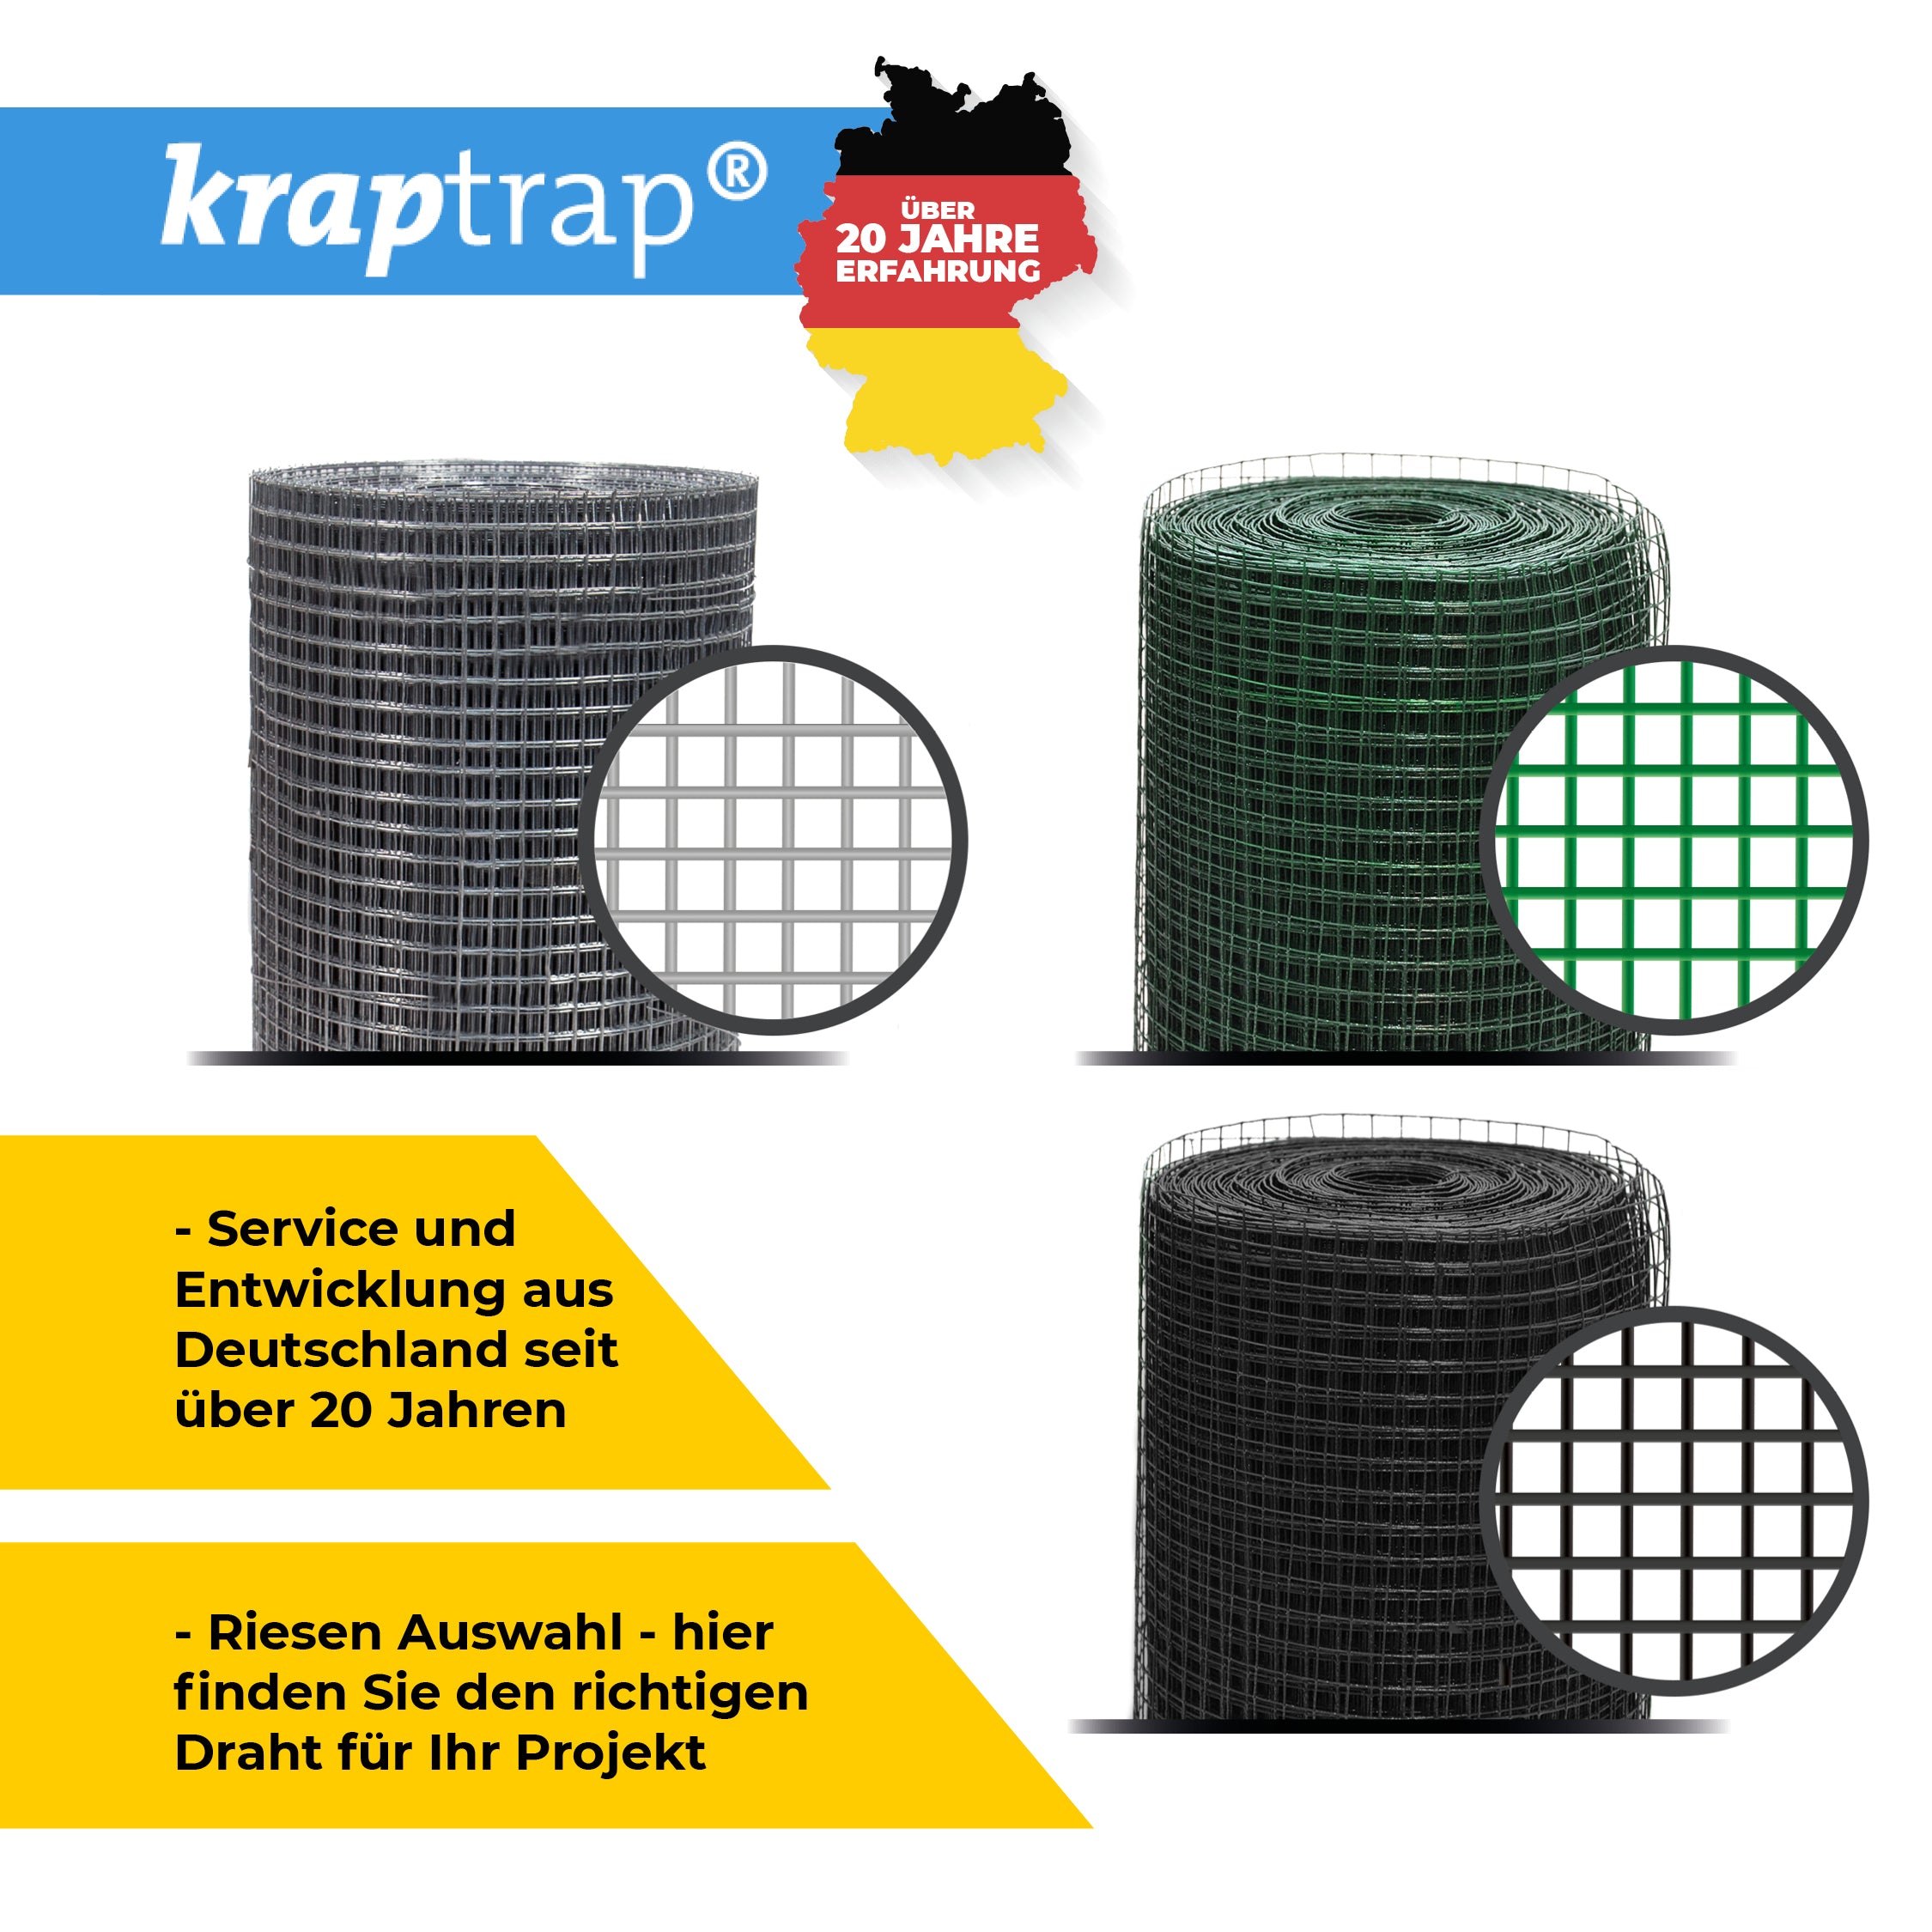 Kraptrap® Volierendraht Drahtgitter 12,7 mm Masche, 100 cm breit, schwarz ummantelt